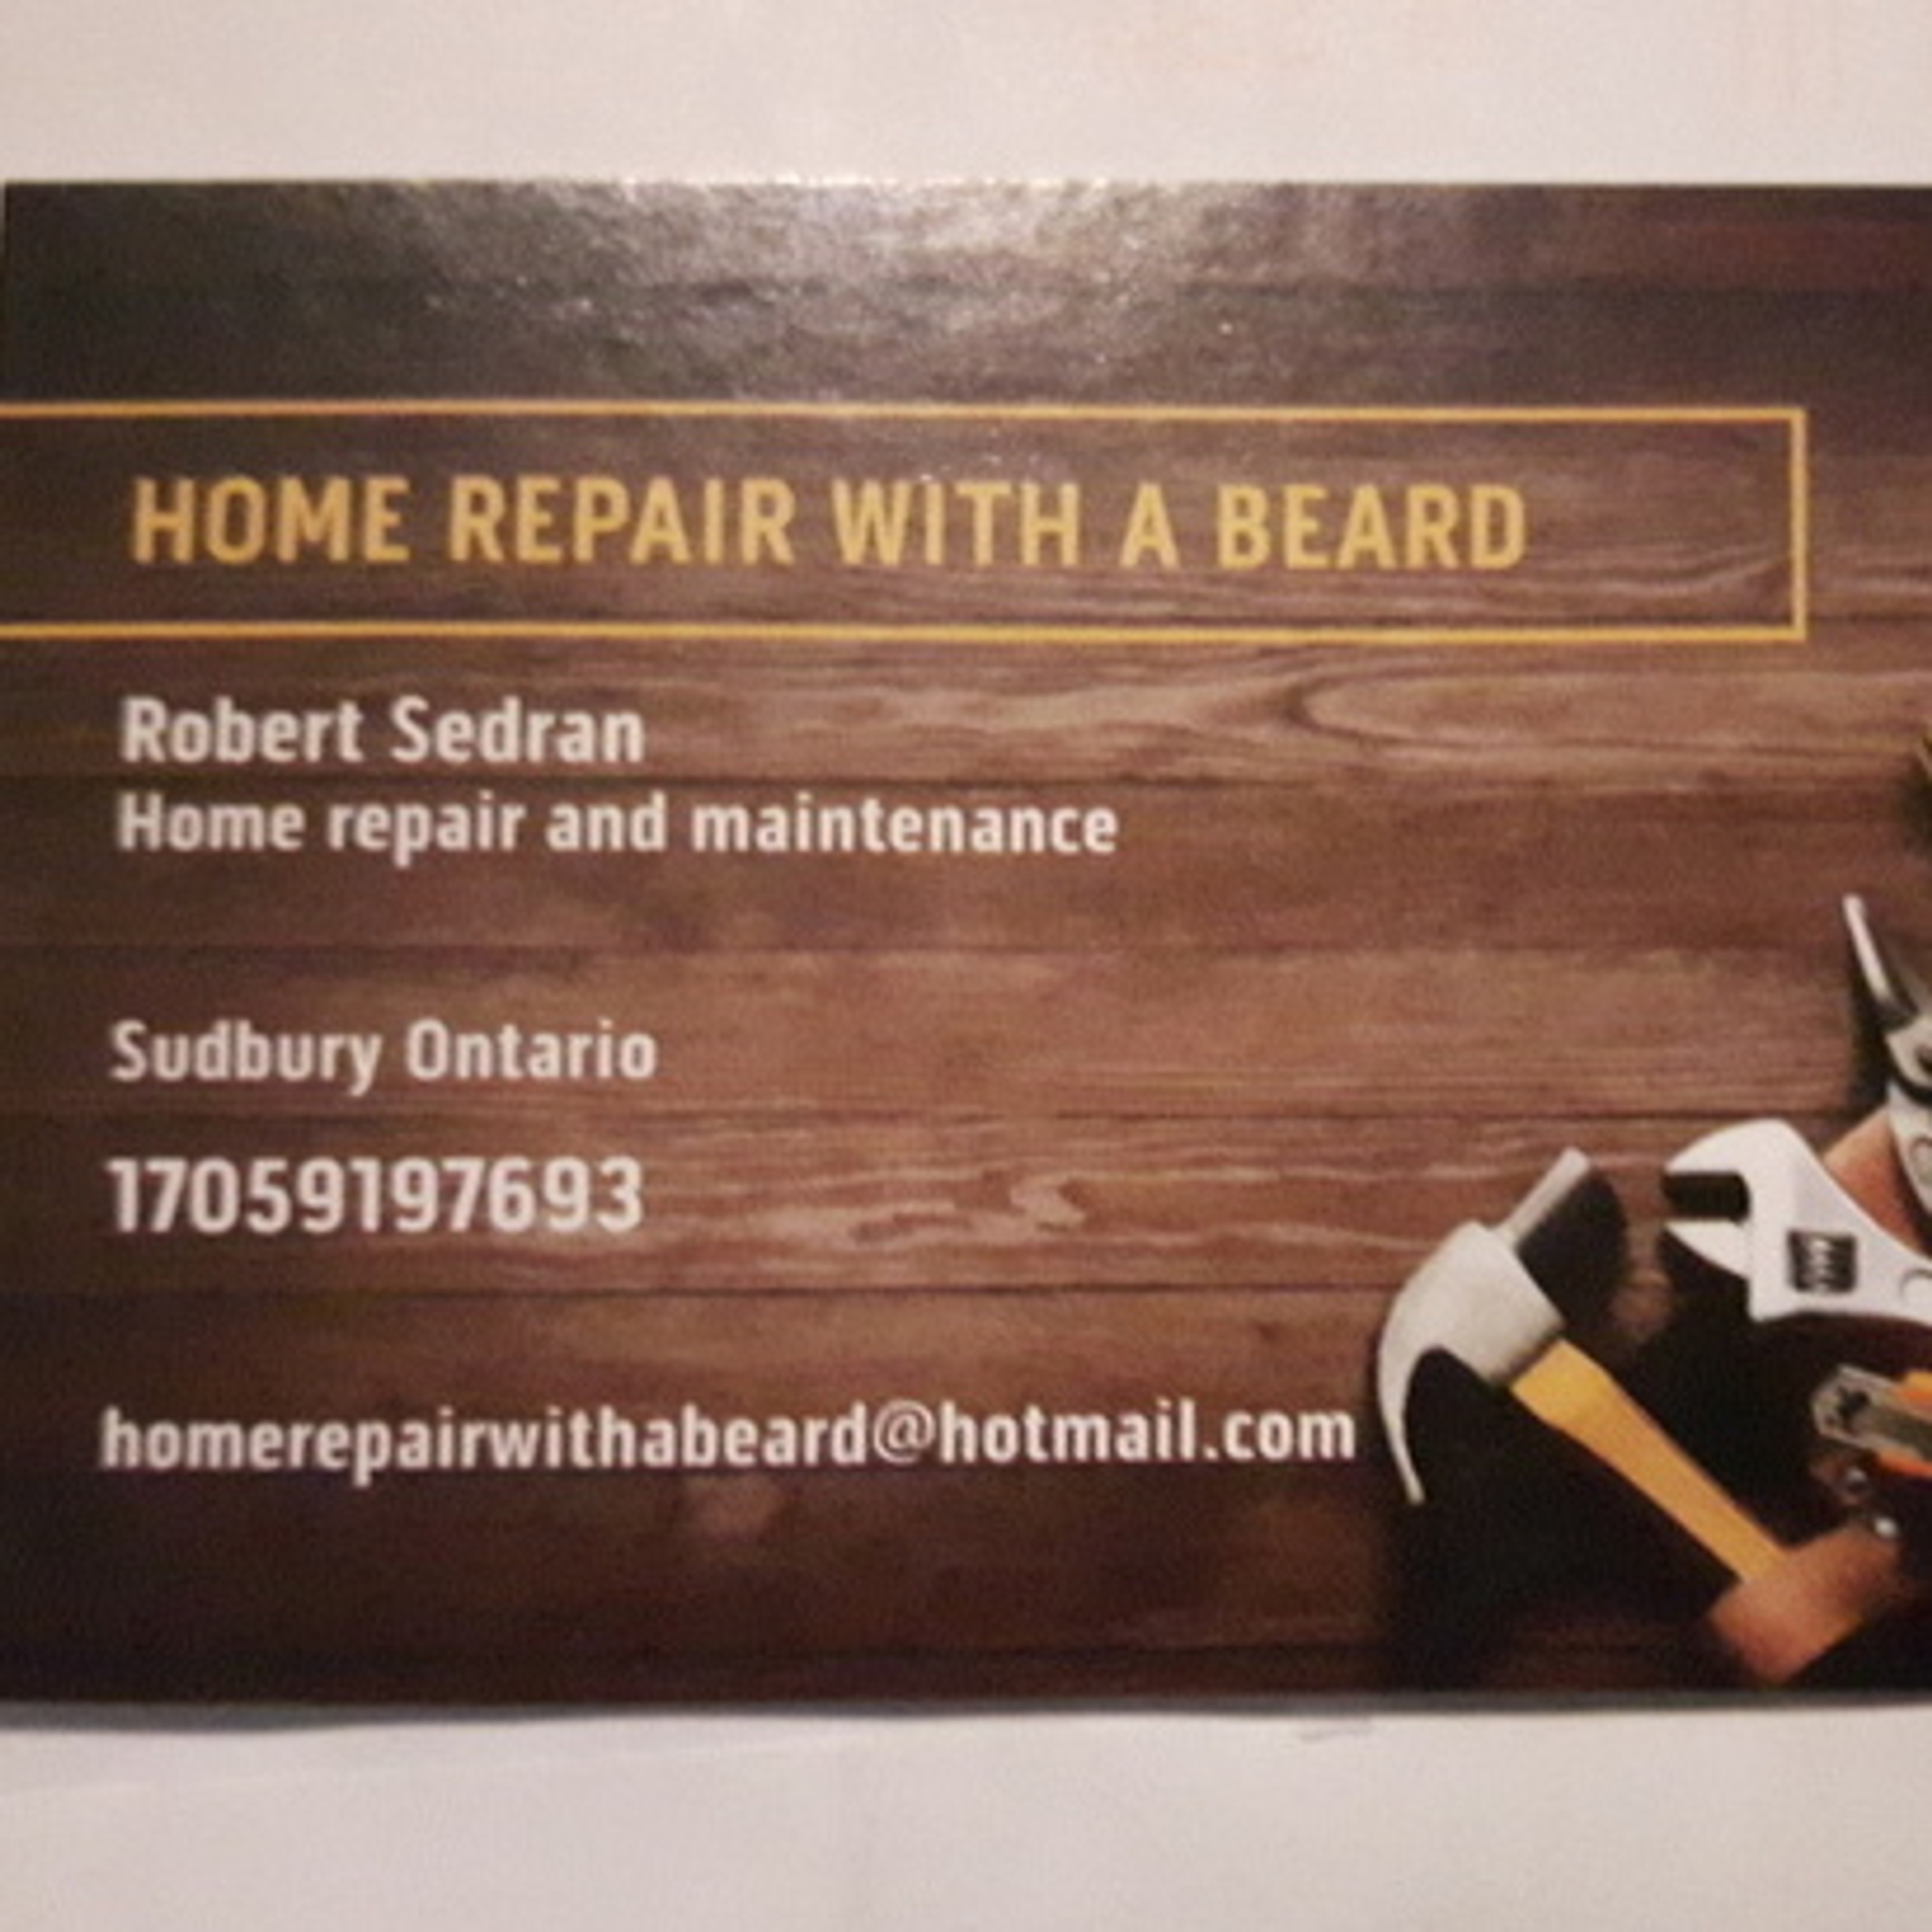 Home repair with a beard